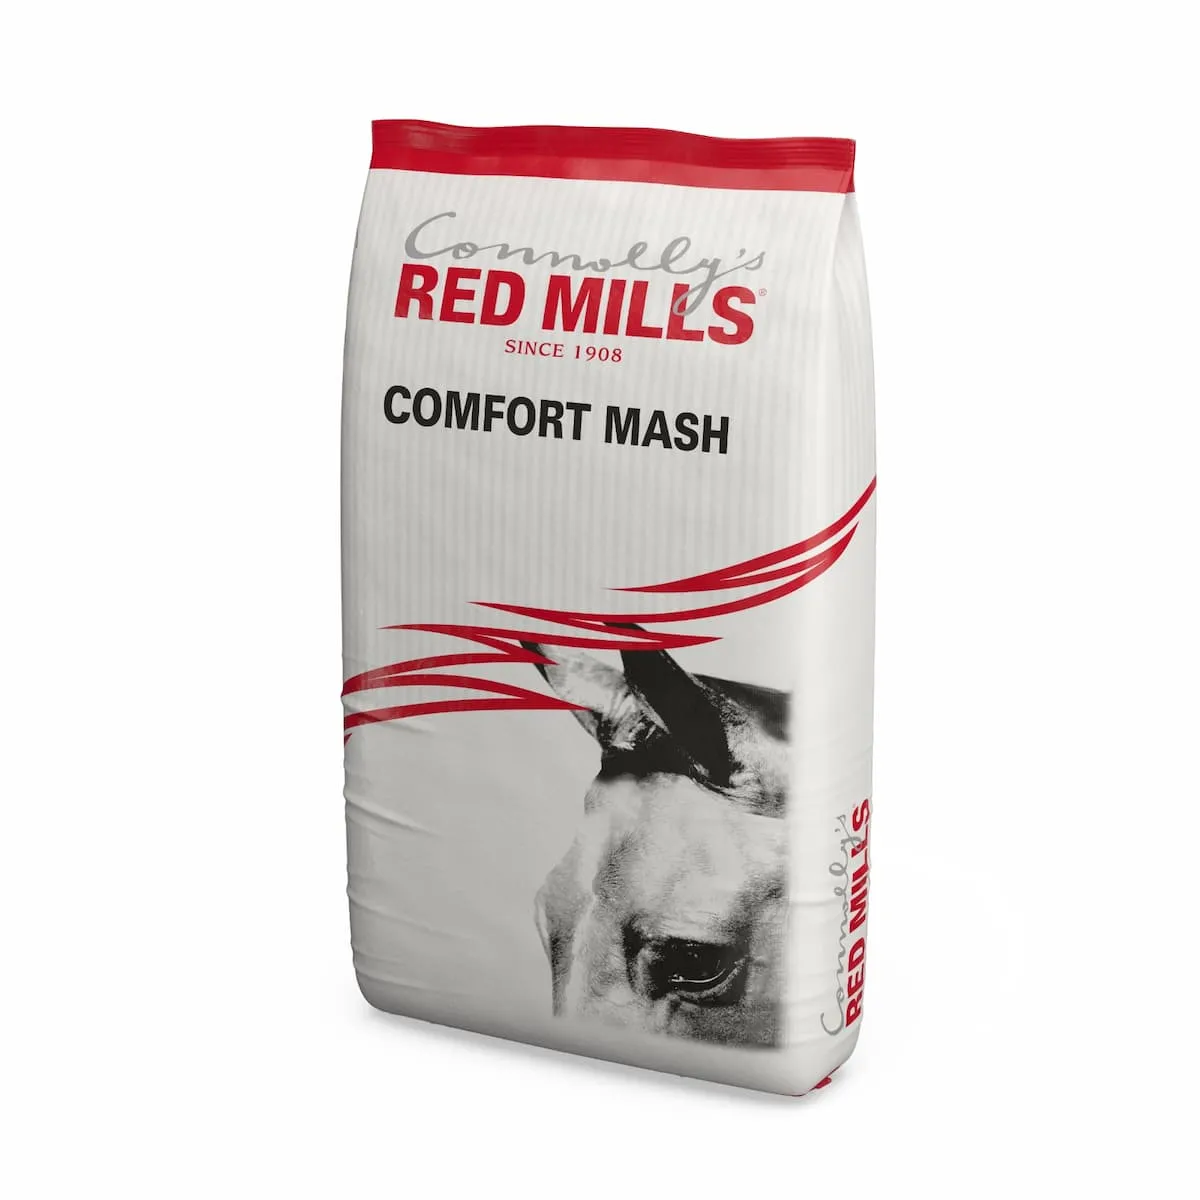 RED MILLS Comfort Mash